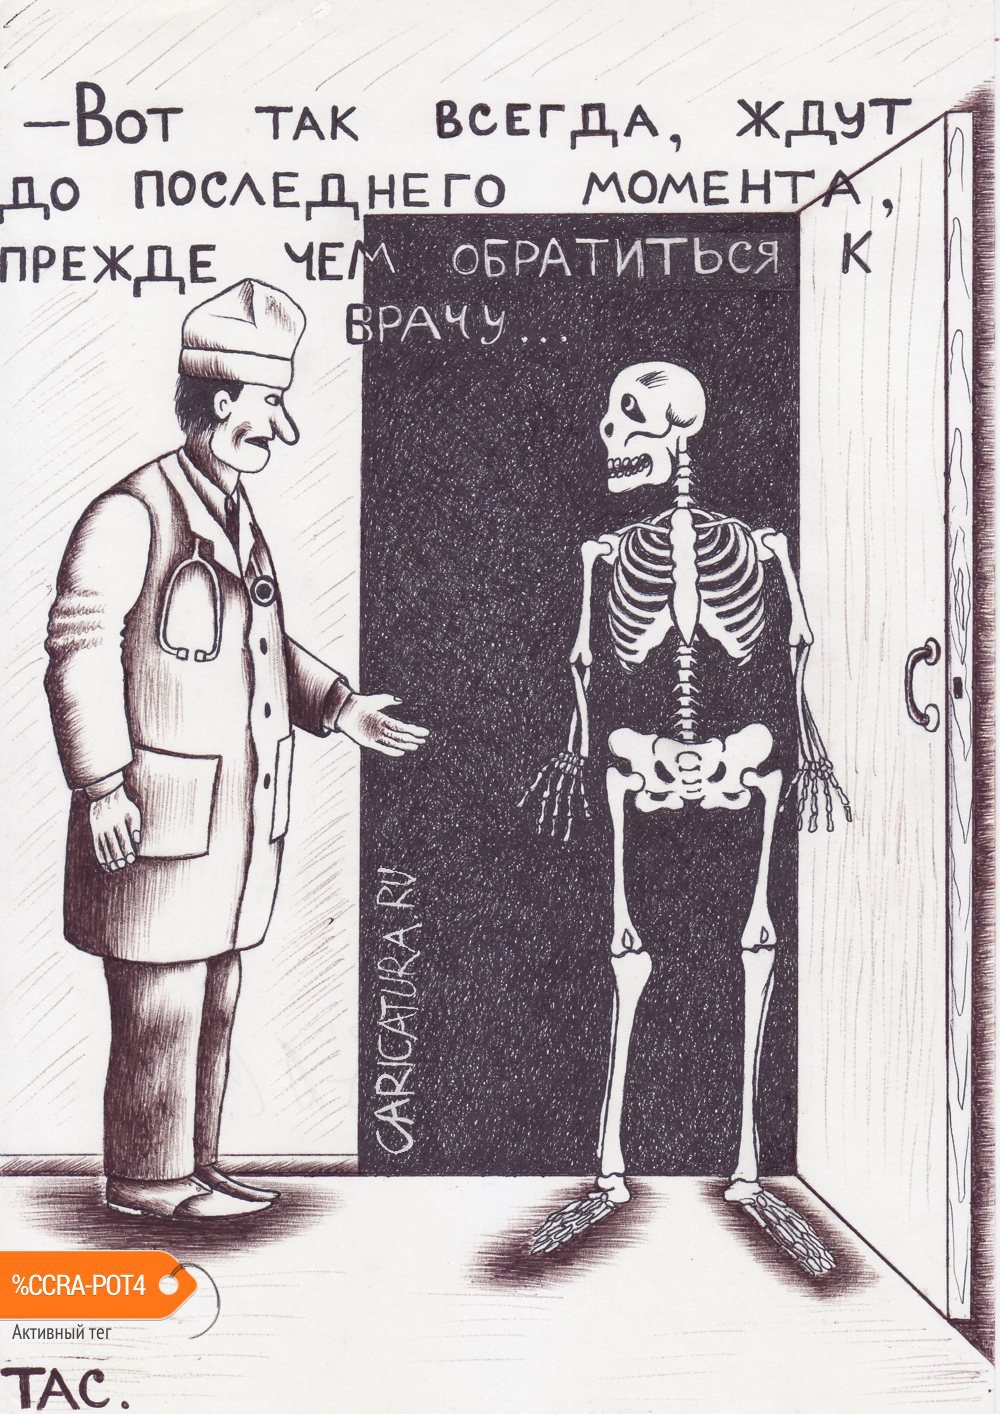 Карикатура "До последнего", Александр Троицкий